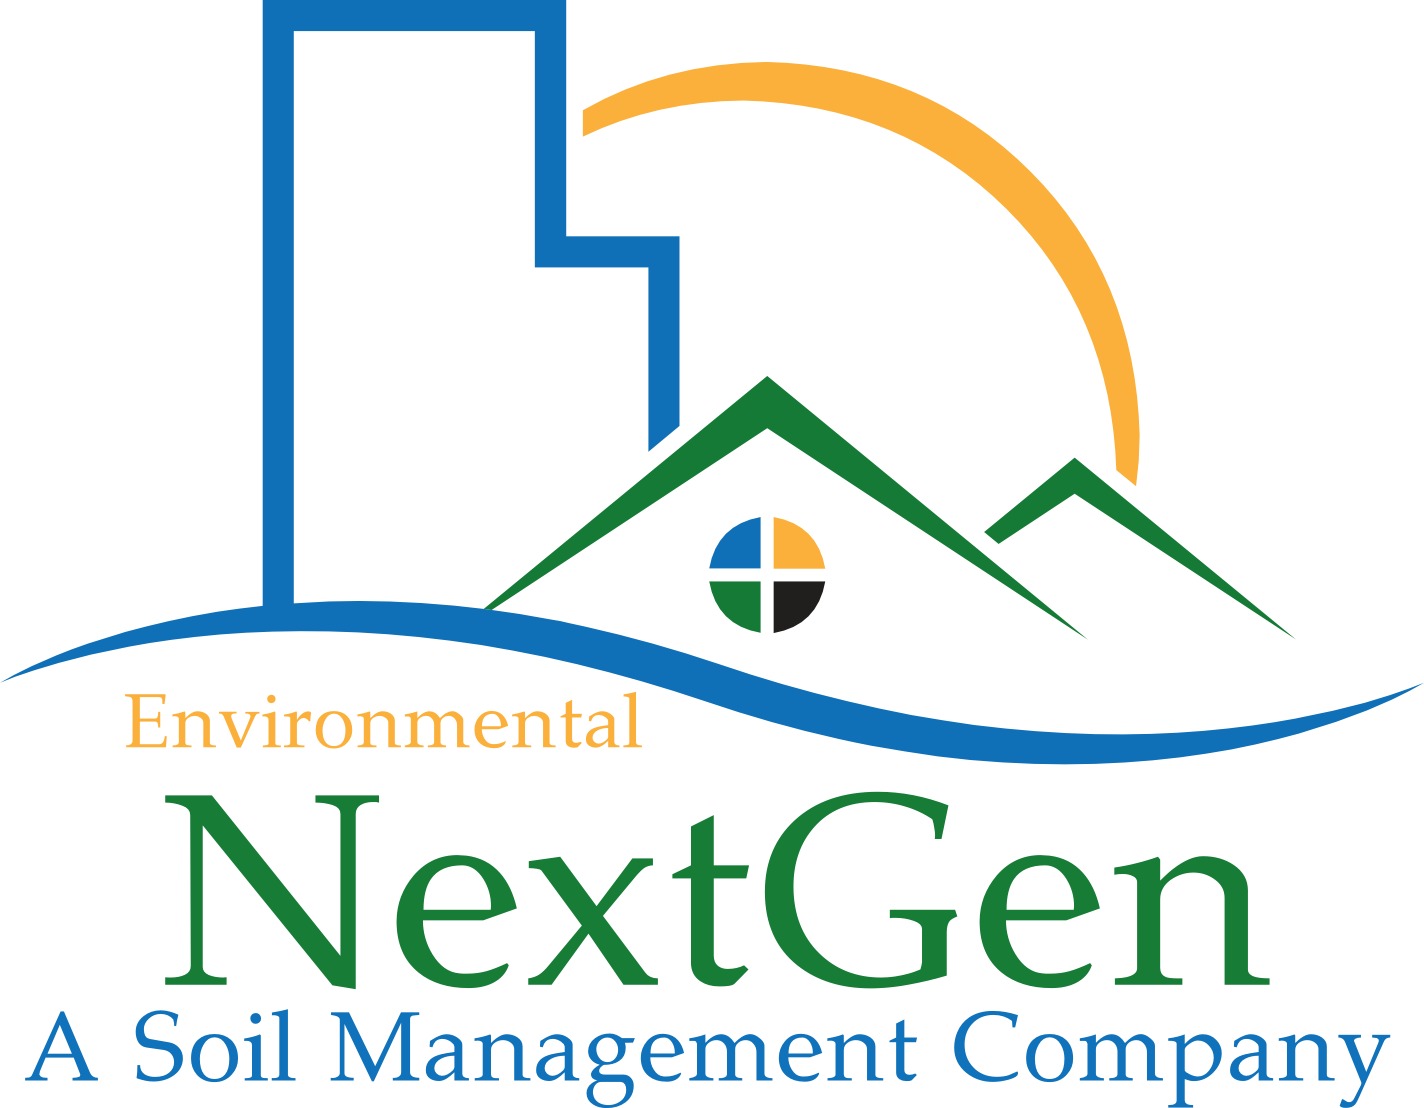 A Soil Management Company